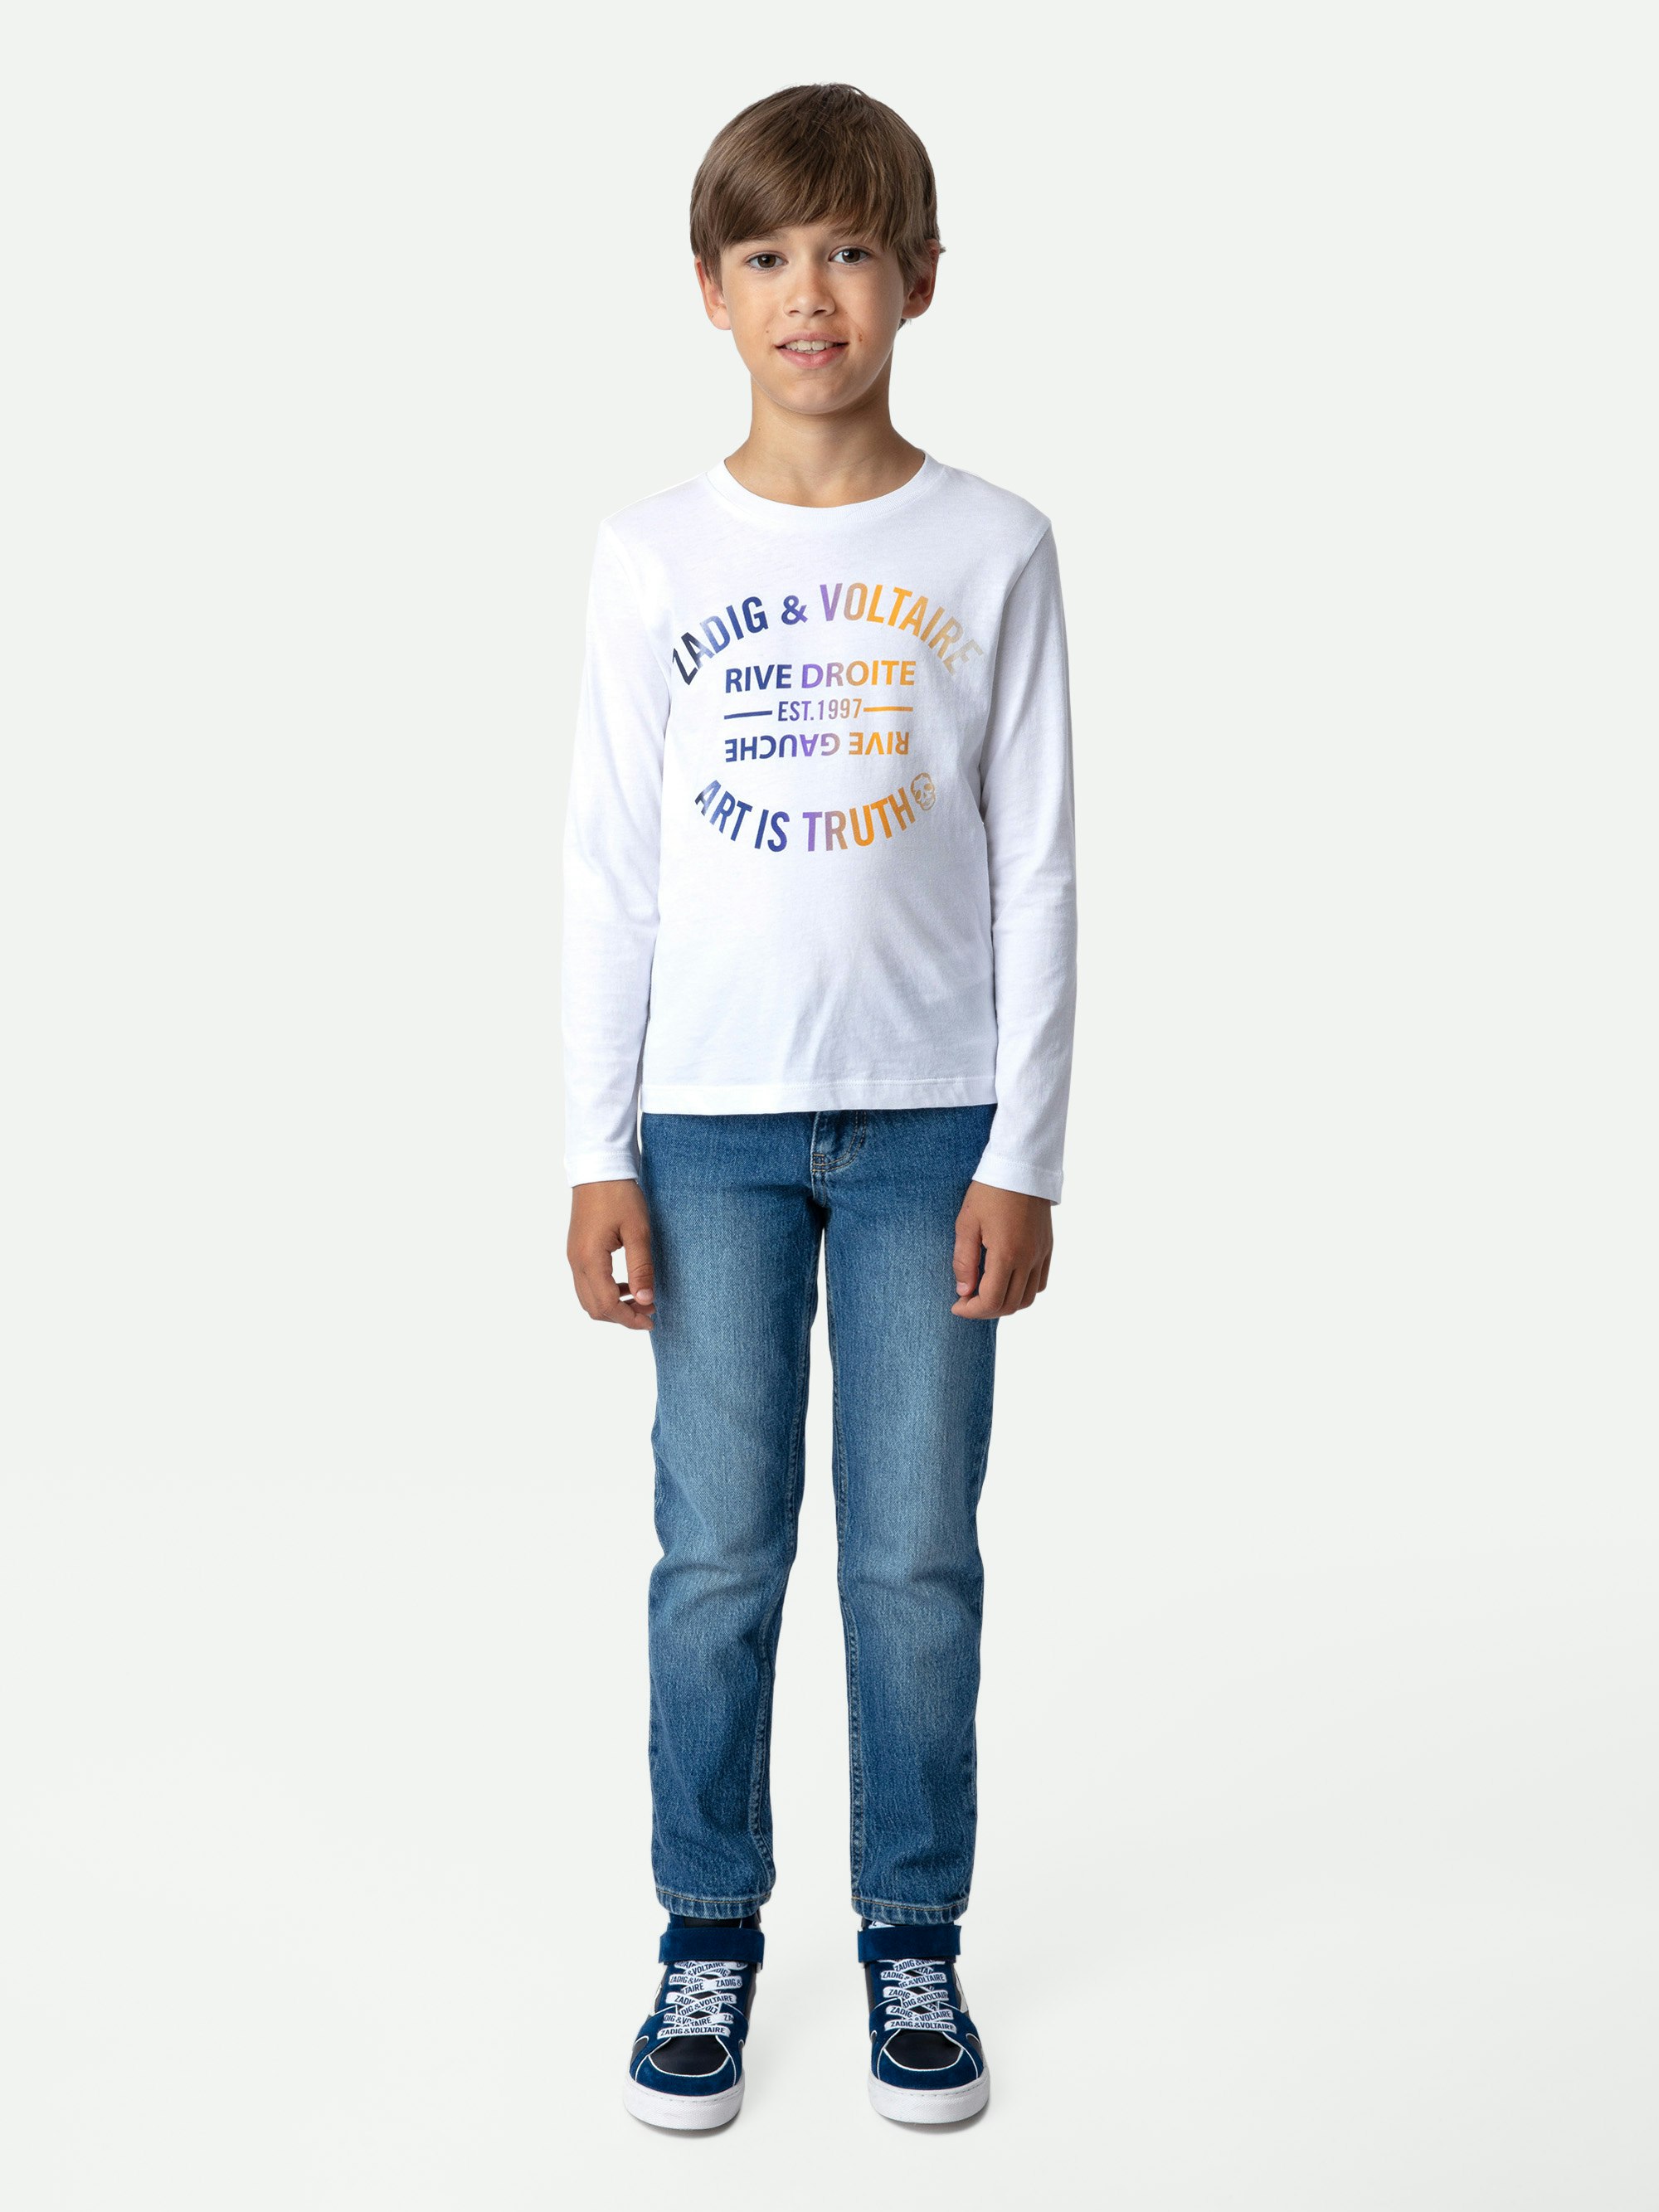 T-shirt Kita Bambino - T-shirt a maniche lunghe in jersey di cotone bianca con stemma da bambino.